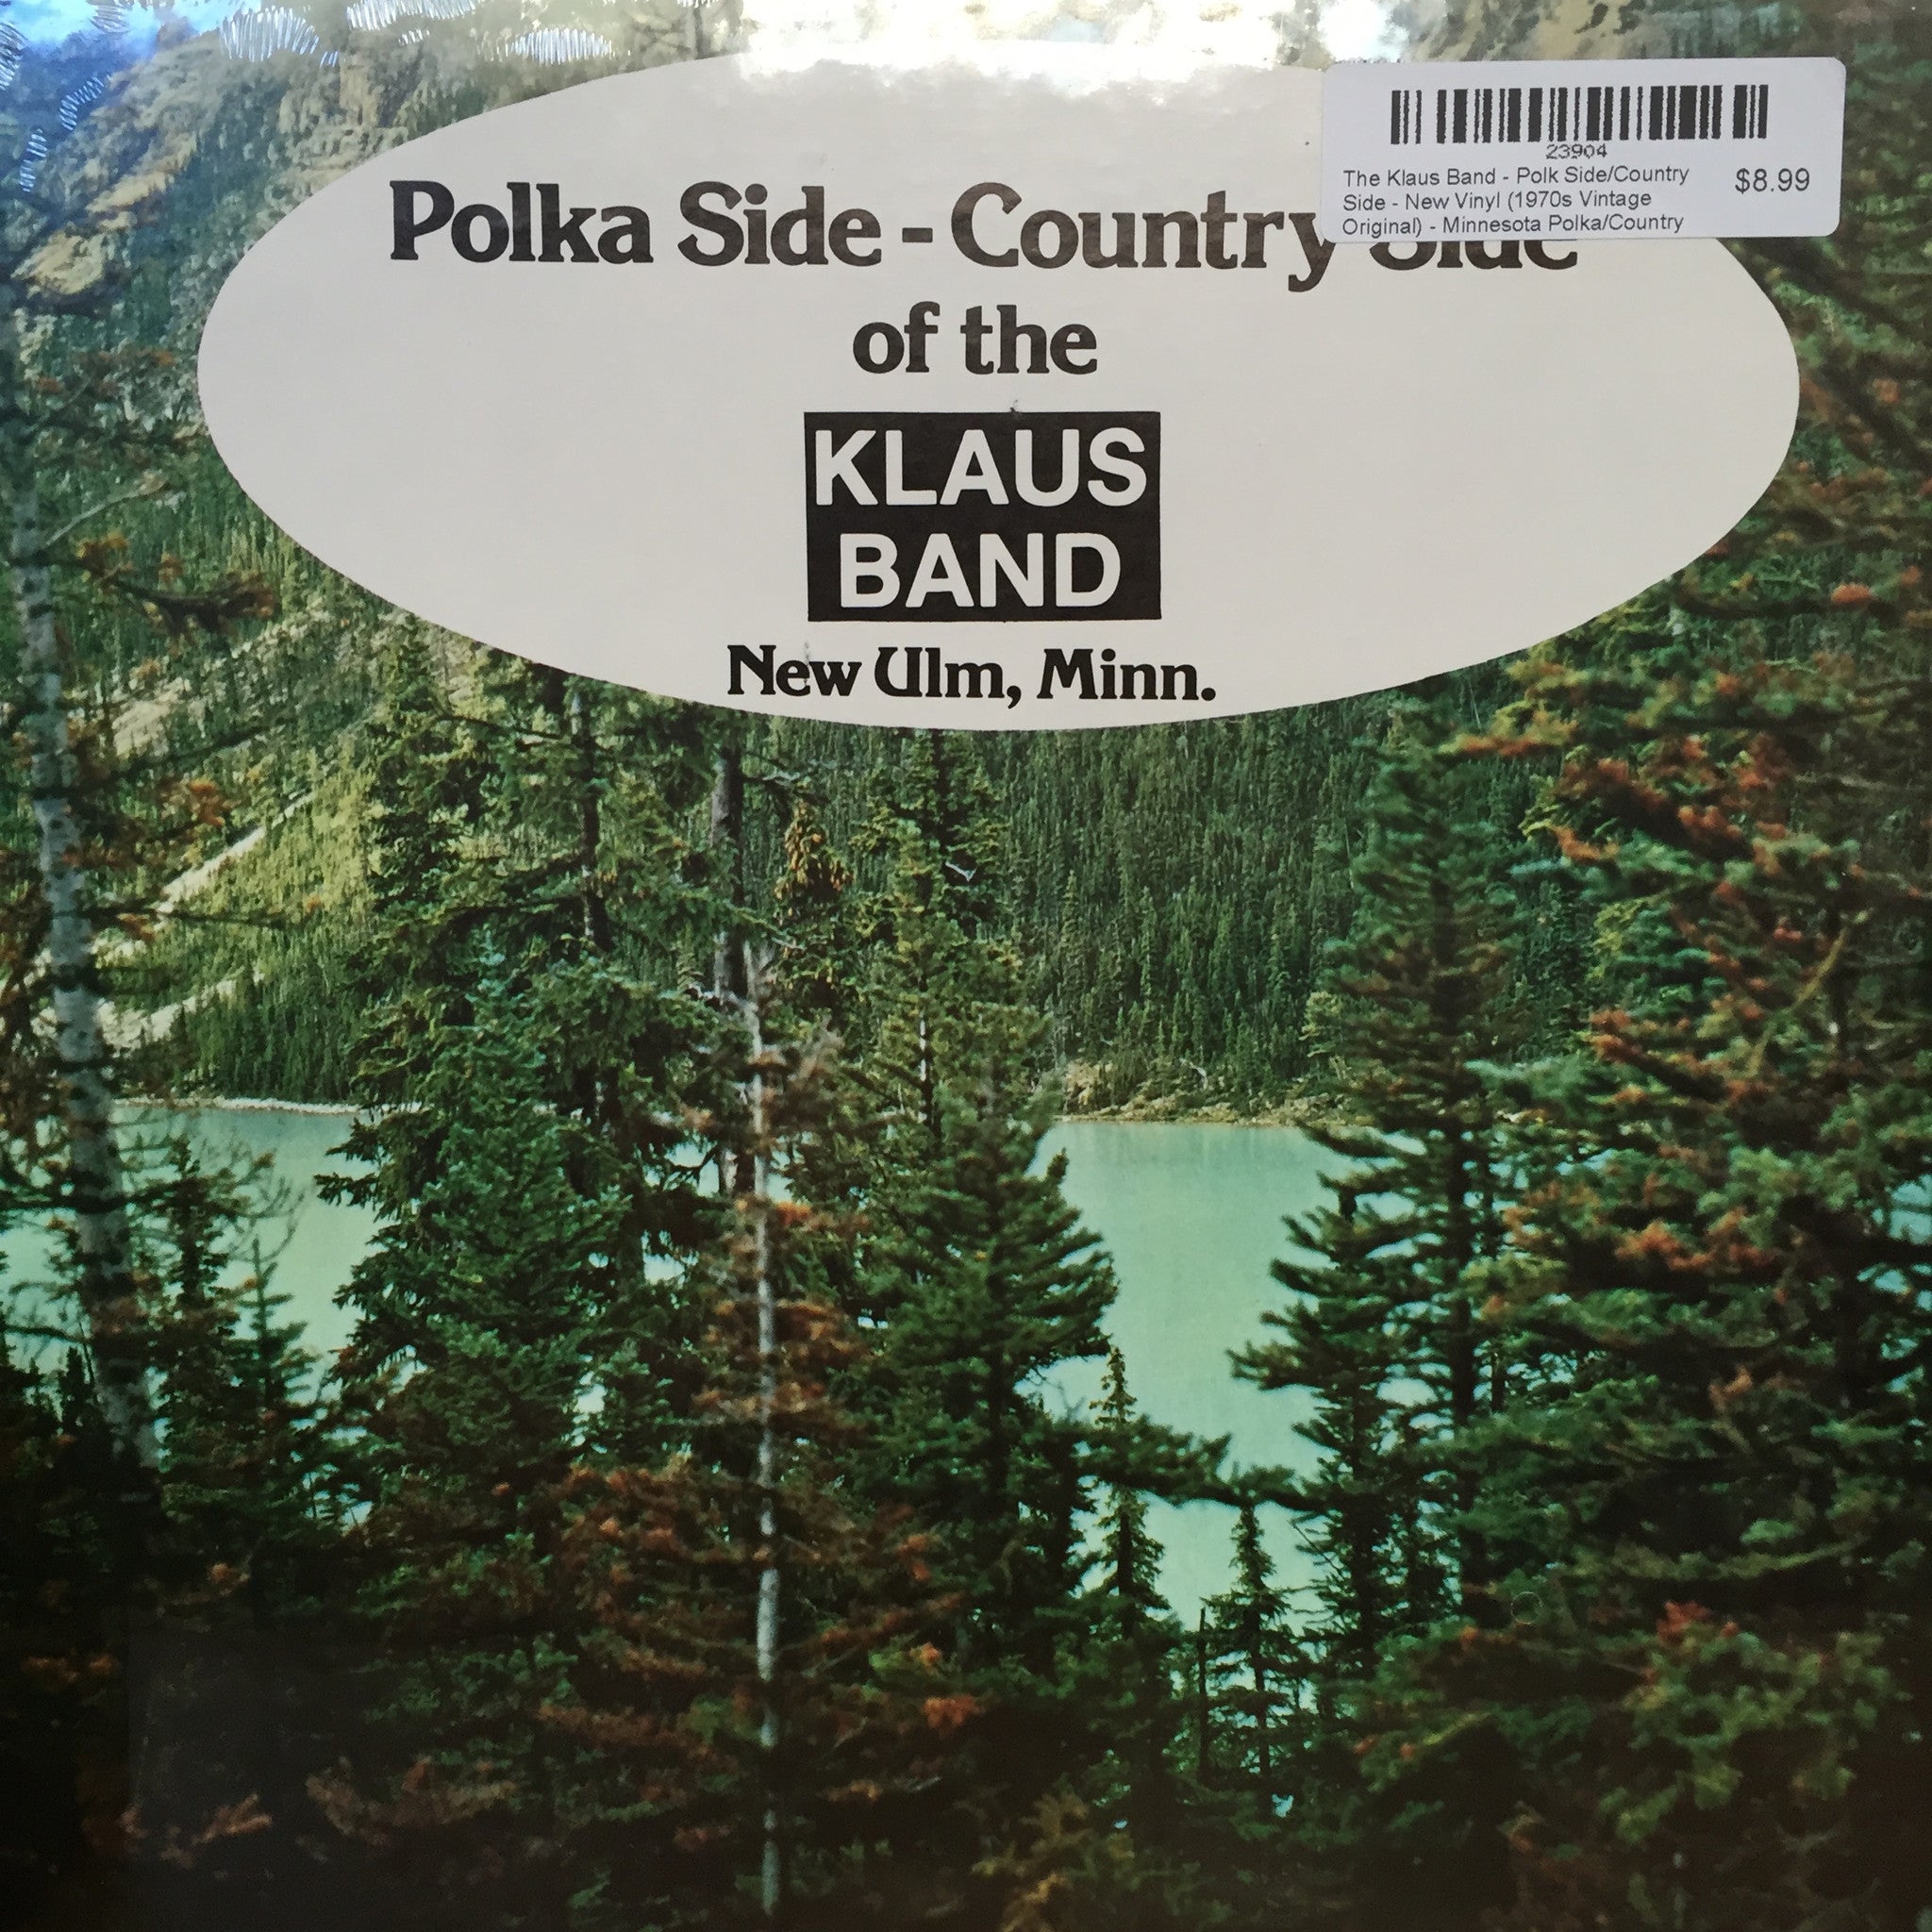 The Klaus Band - Polk Side/Country Side - New Vinyl Record (1970s Vintage Original) - Minnesota Polka/Country